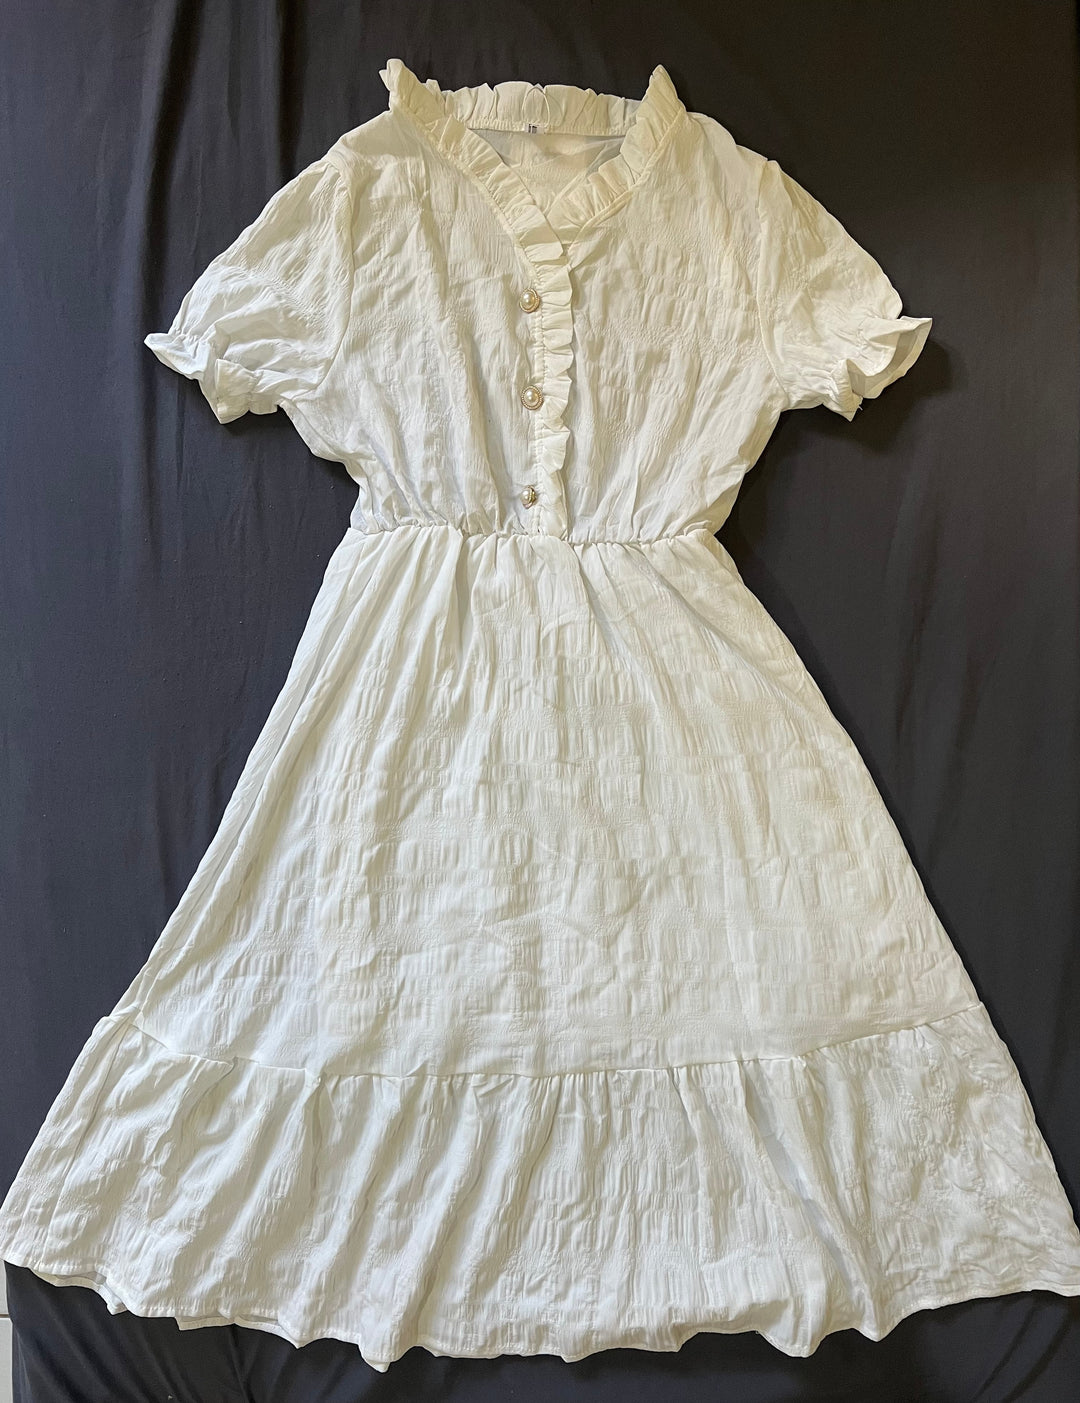 Vintage-Inspired White Dress - Size Large (Brand New, Never Worn)